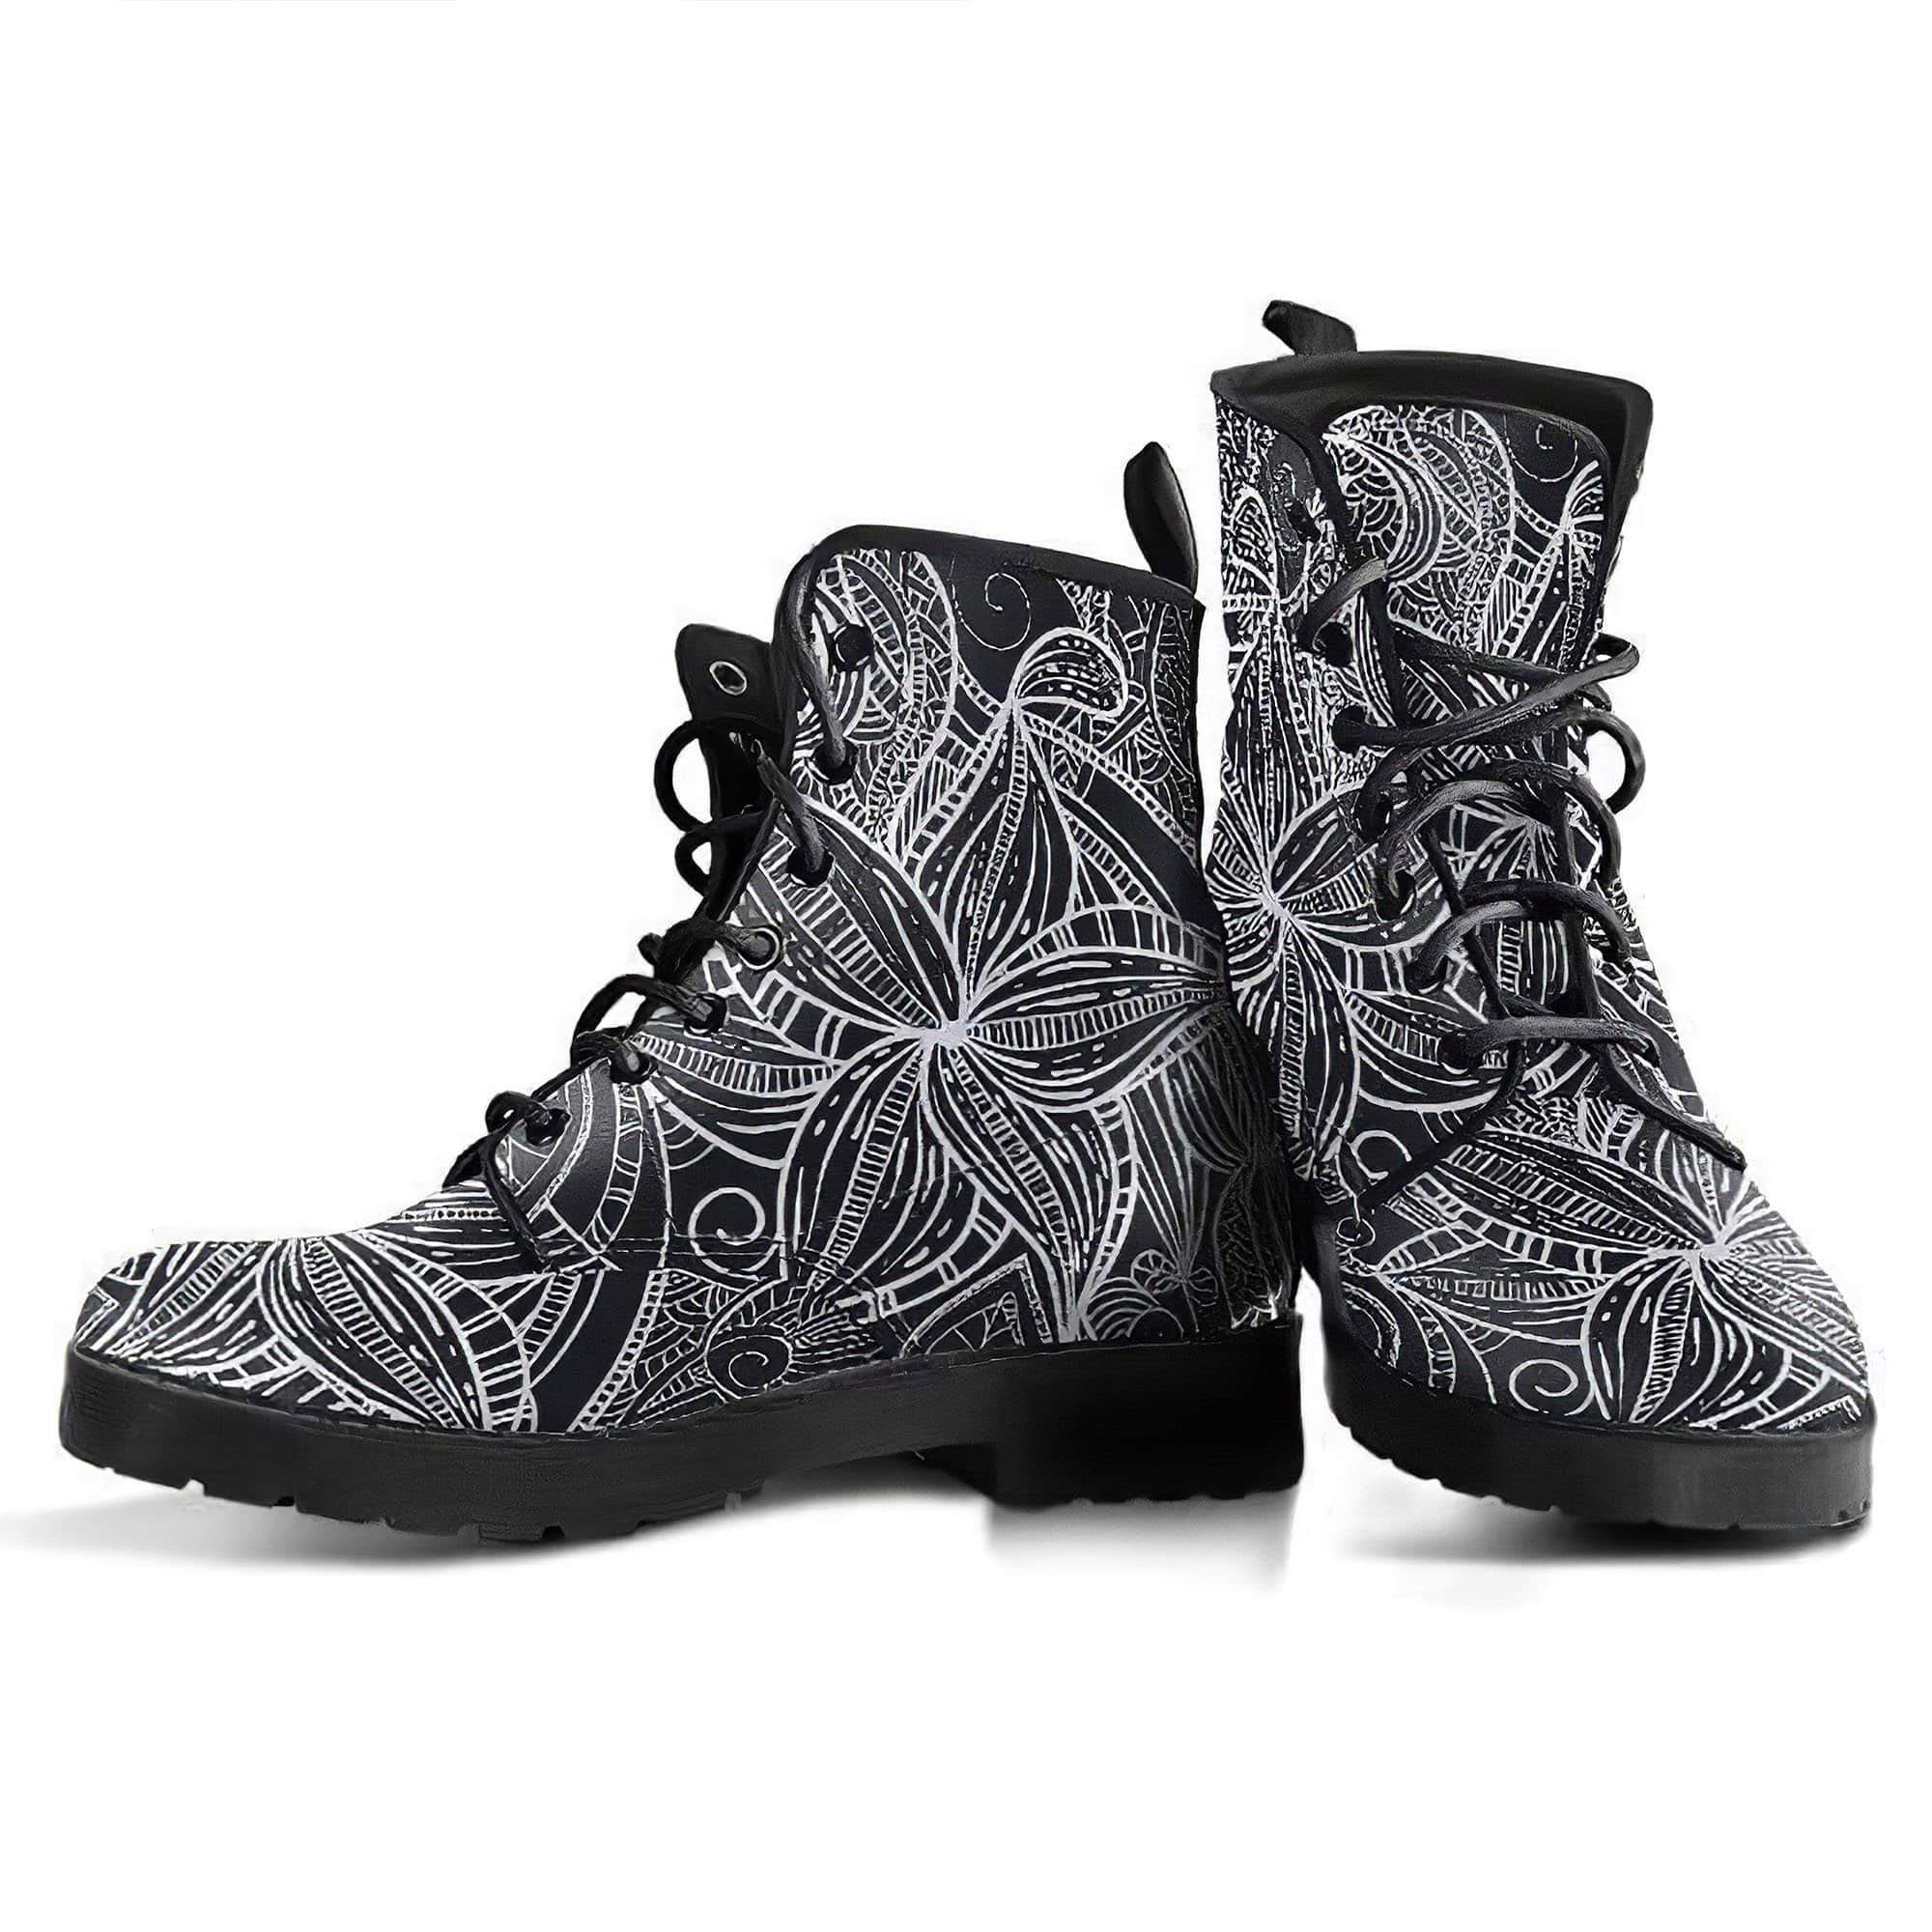 zen-3-handcrafted-boots-women-s-leather-boots-12051989987389.jpg